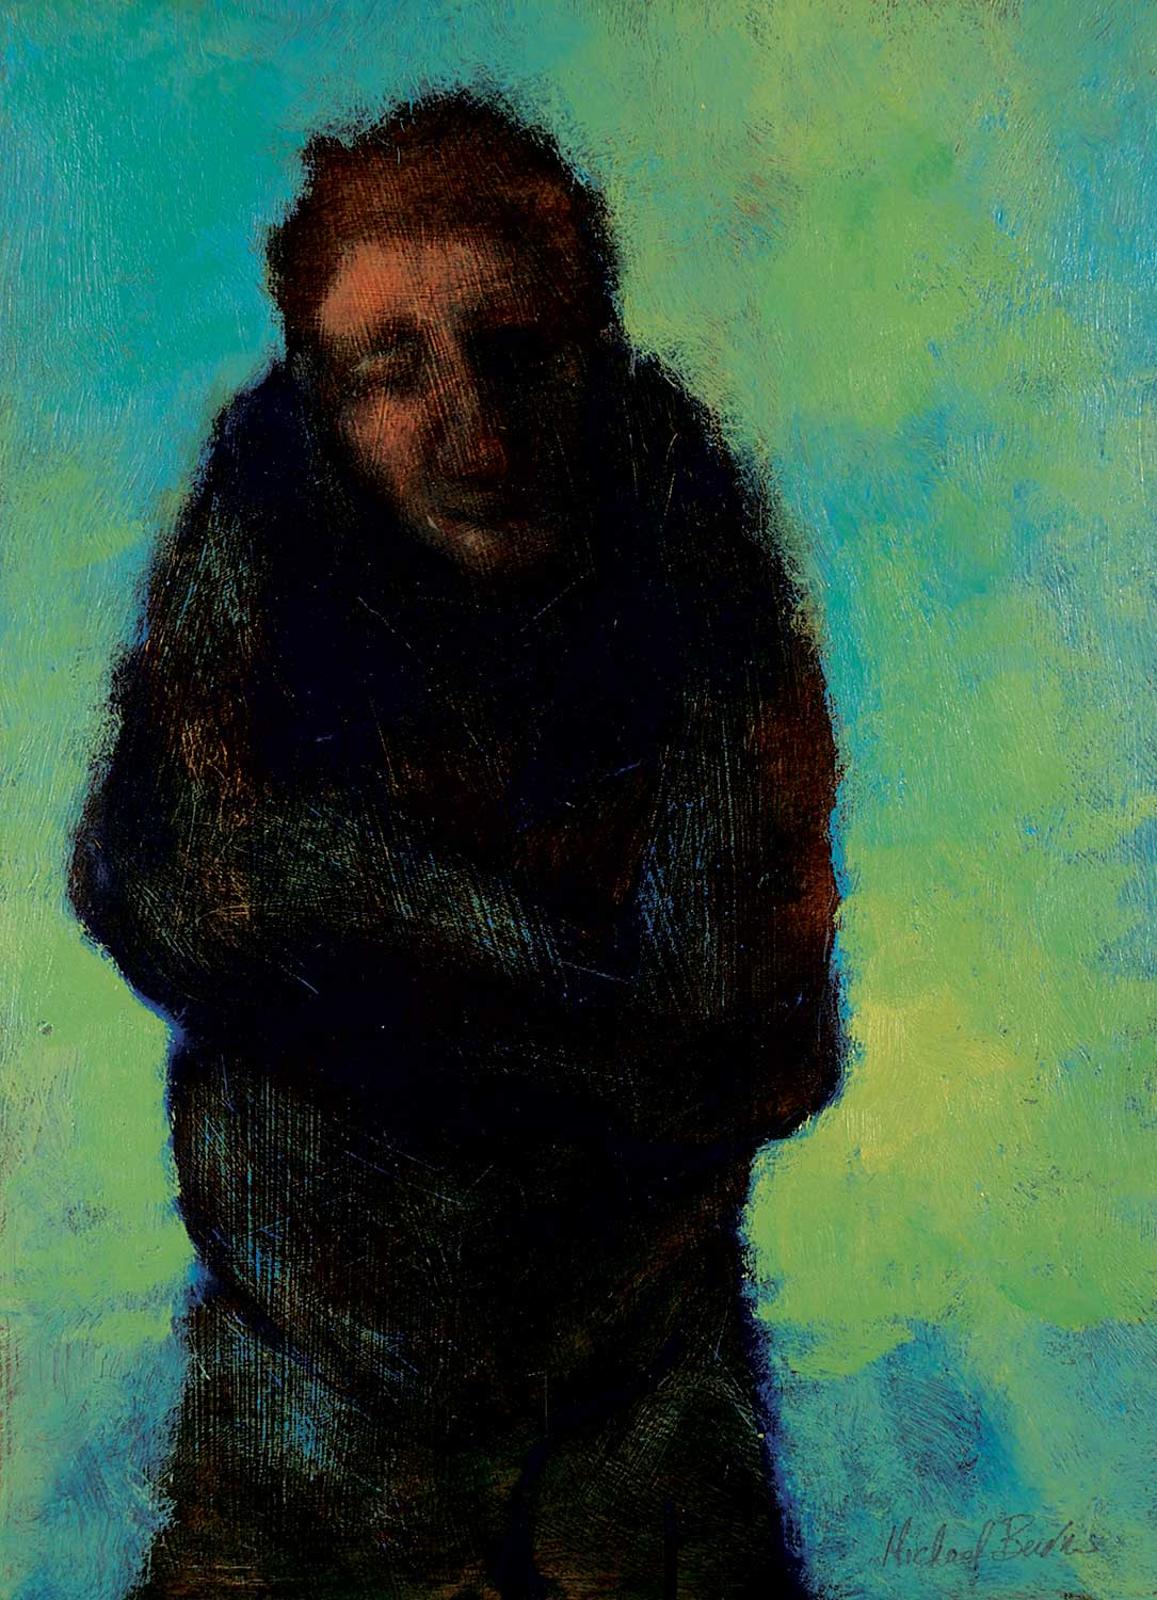 Michael Burns (1954) - Untitled - The Warm Coat